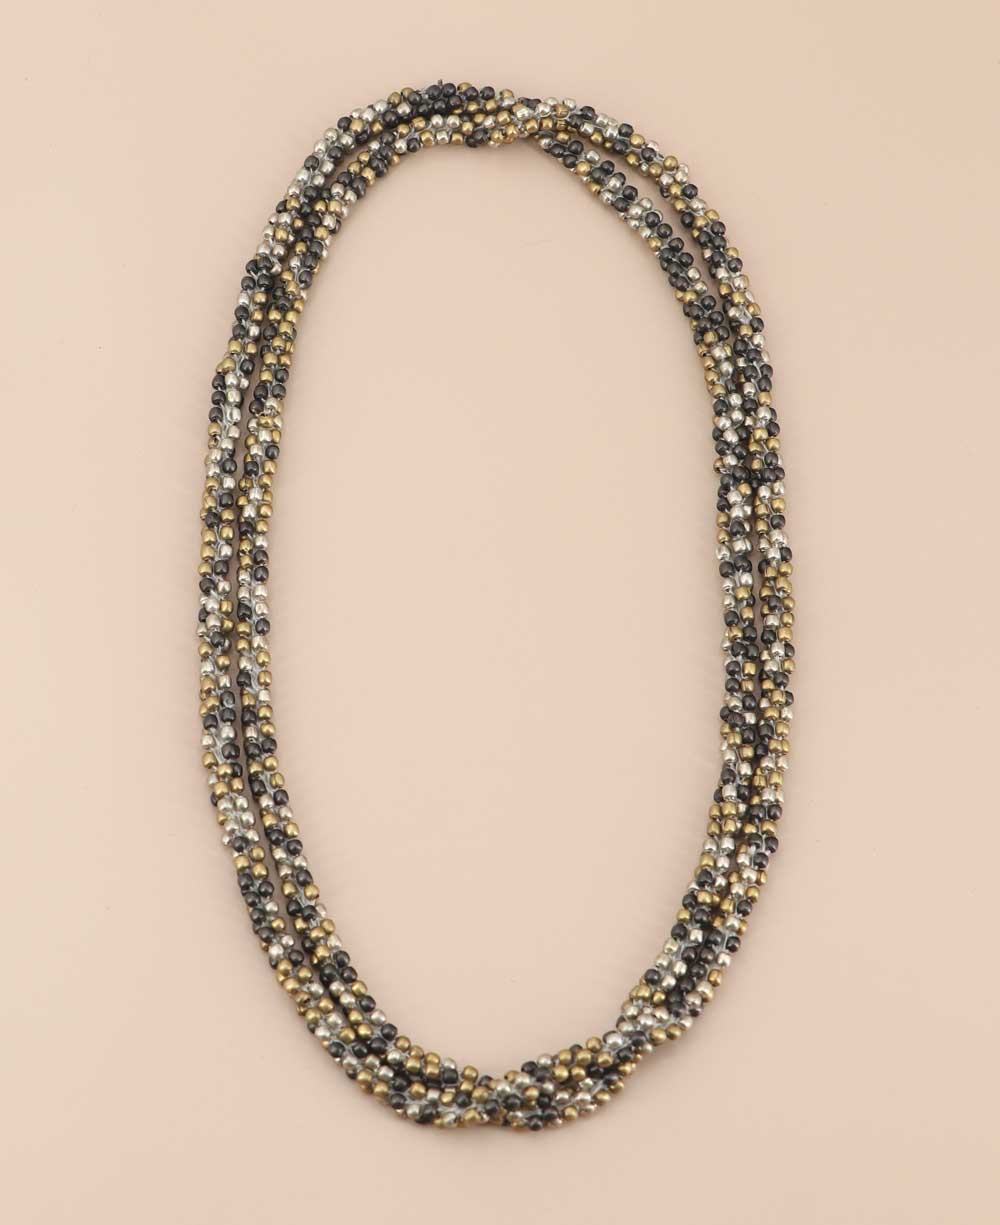 Versatile Tibetan necklace in graphite, gold, and silver tones